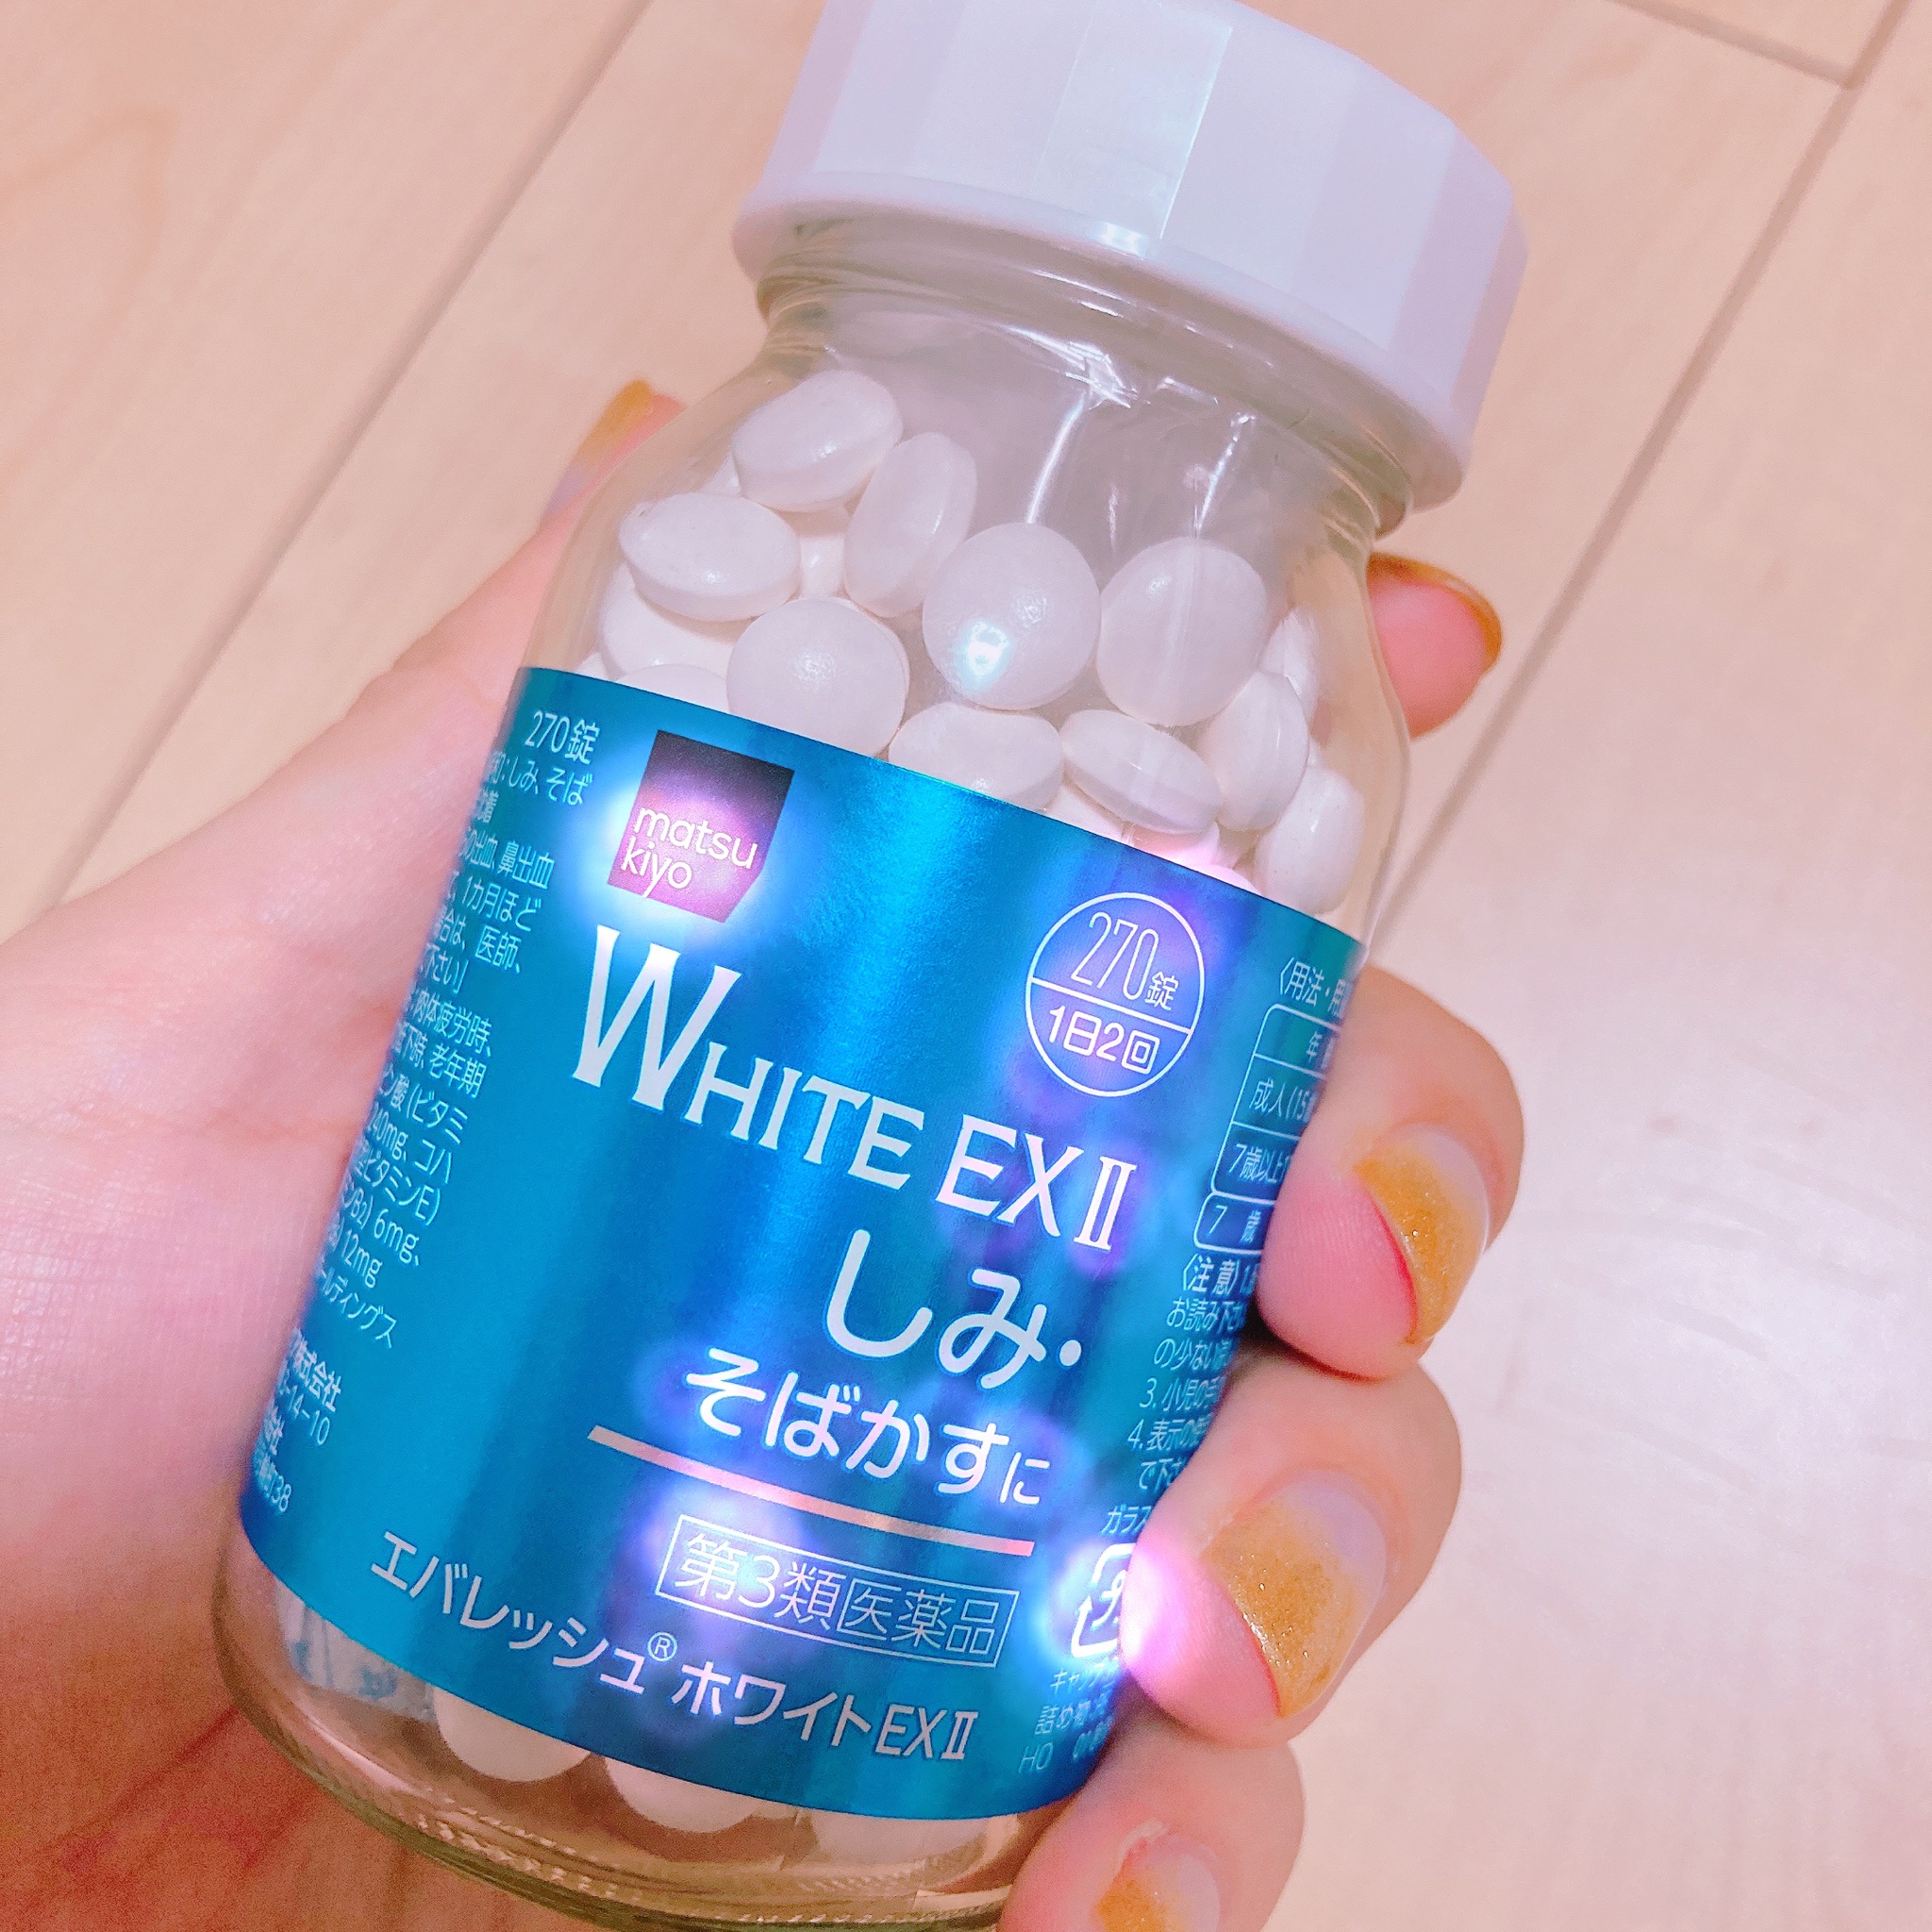 Matsukiyo エバレッシュホワイトex Ii 医薬品 270錠の公式商品情報 美容 化粧品情報はアットコスメ